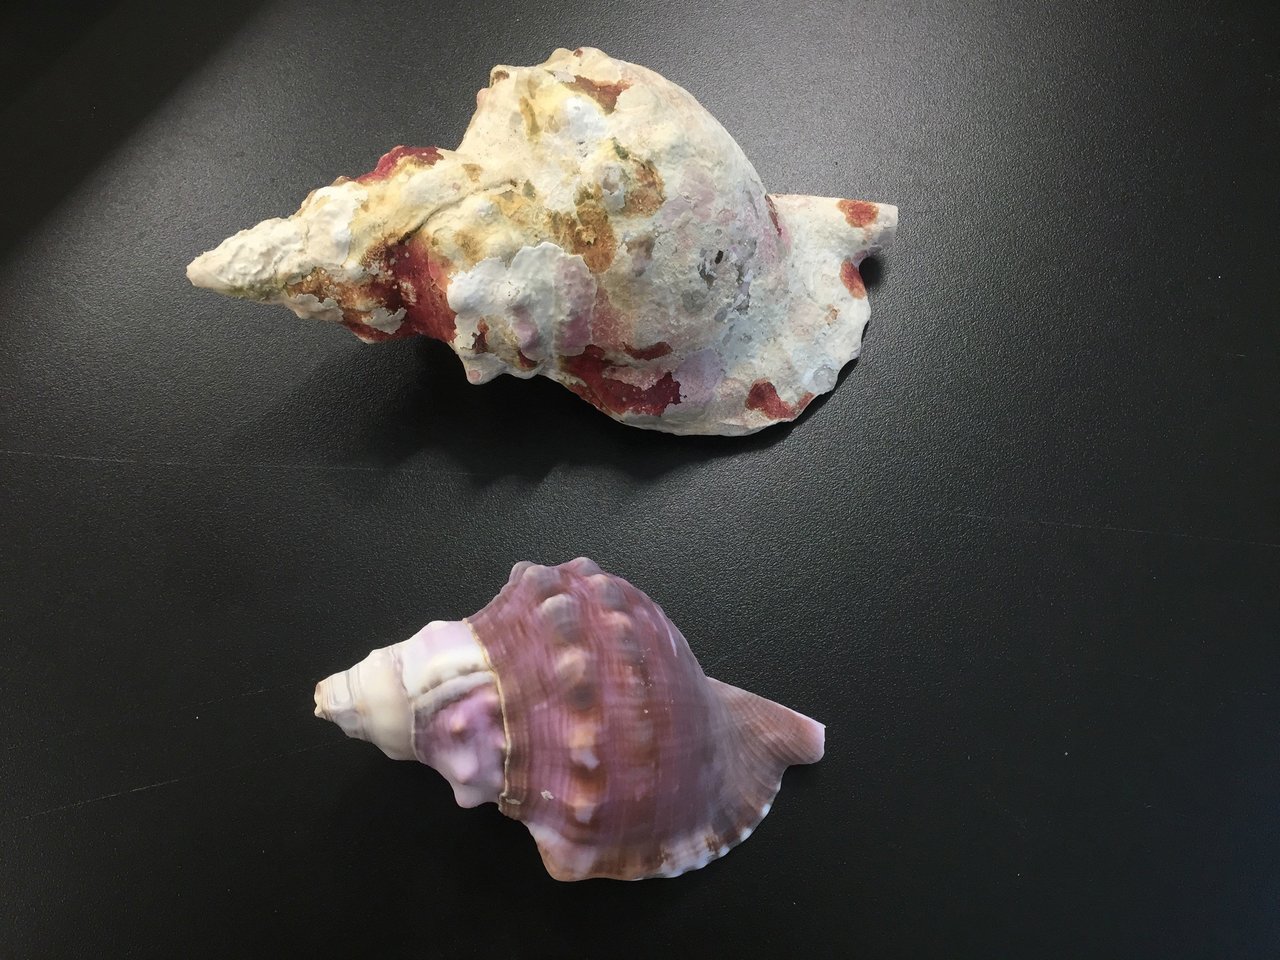 Dissolving Sea Shells - Pacific Science Center